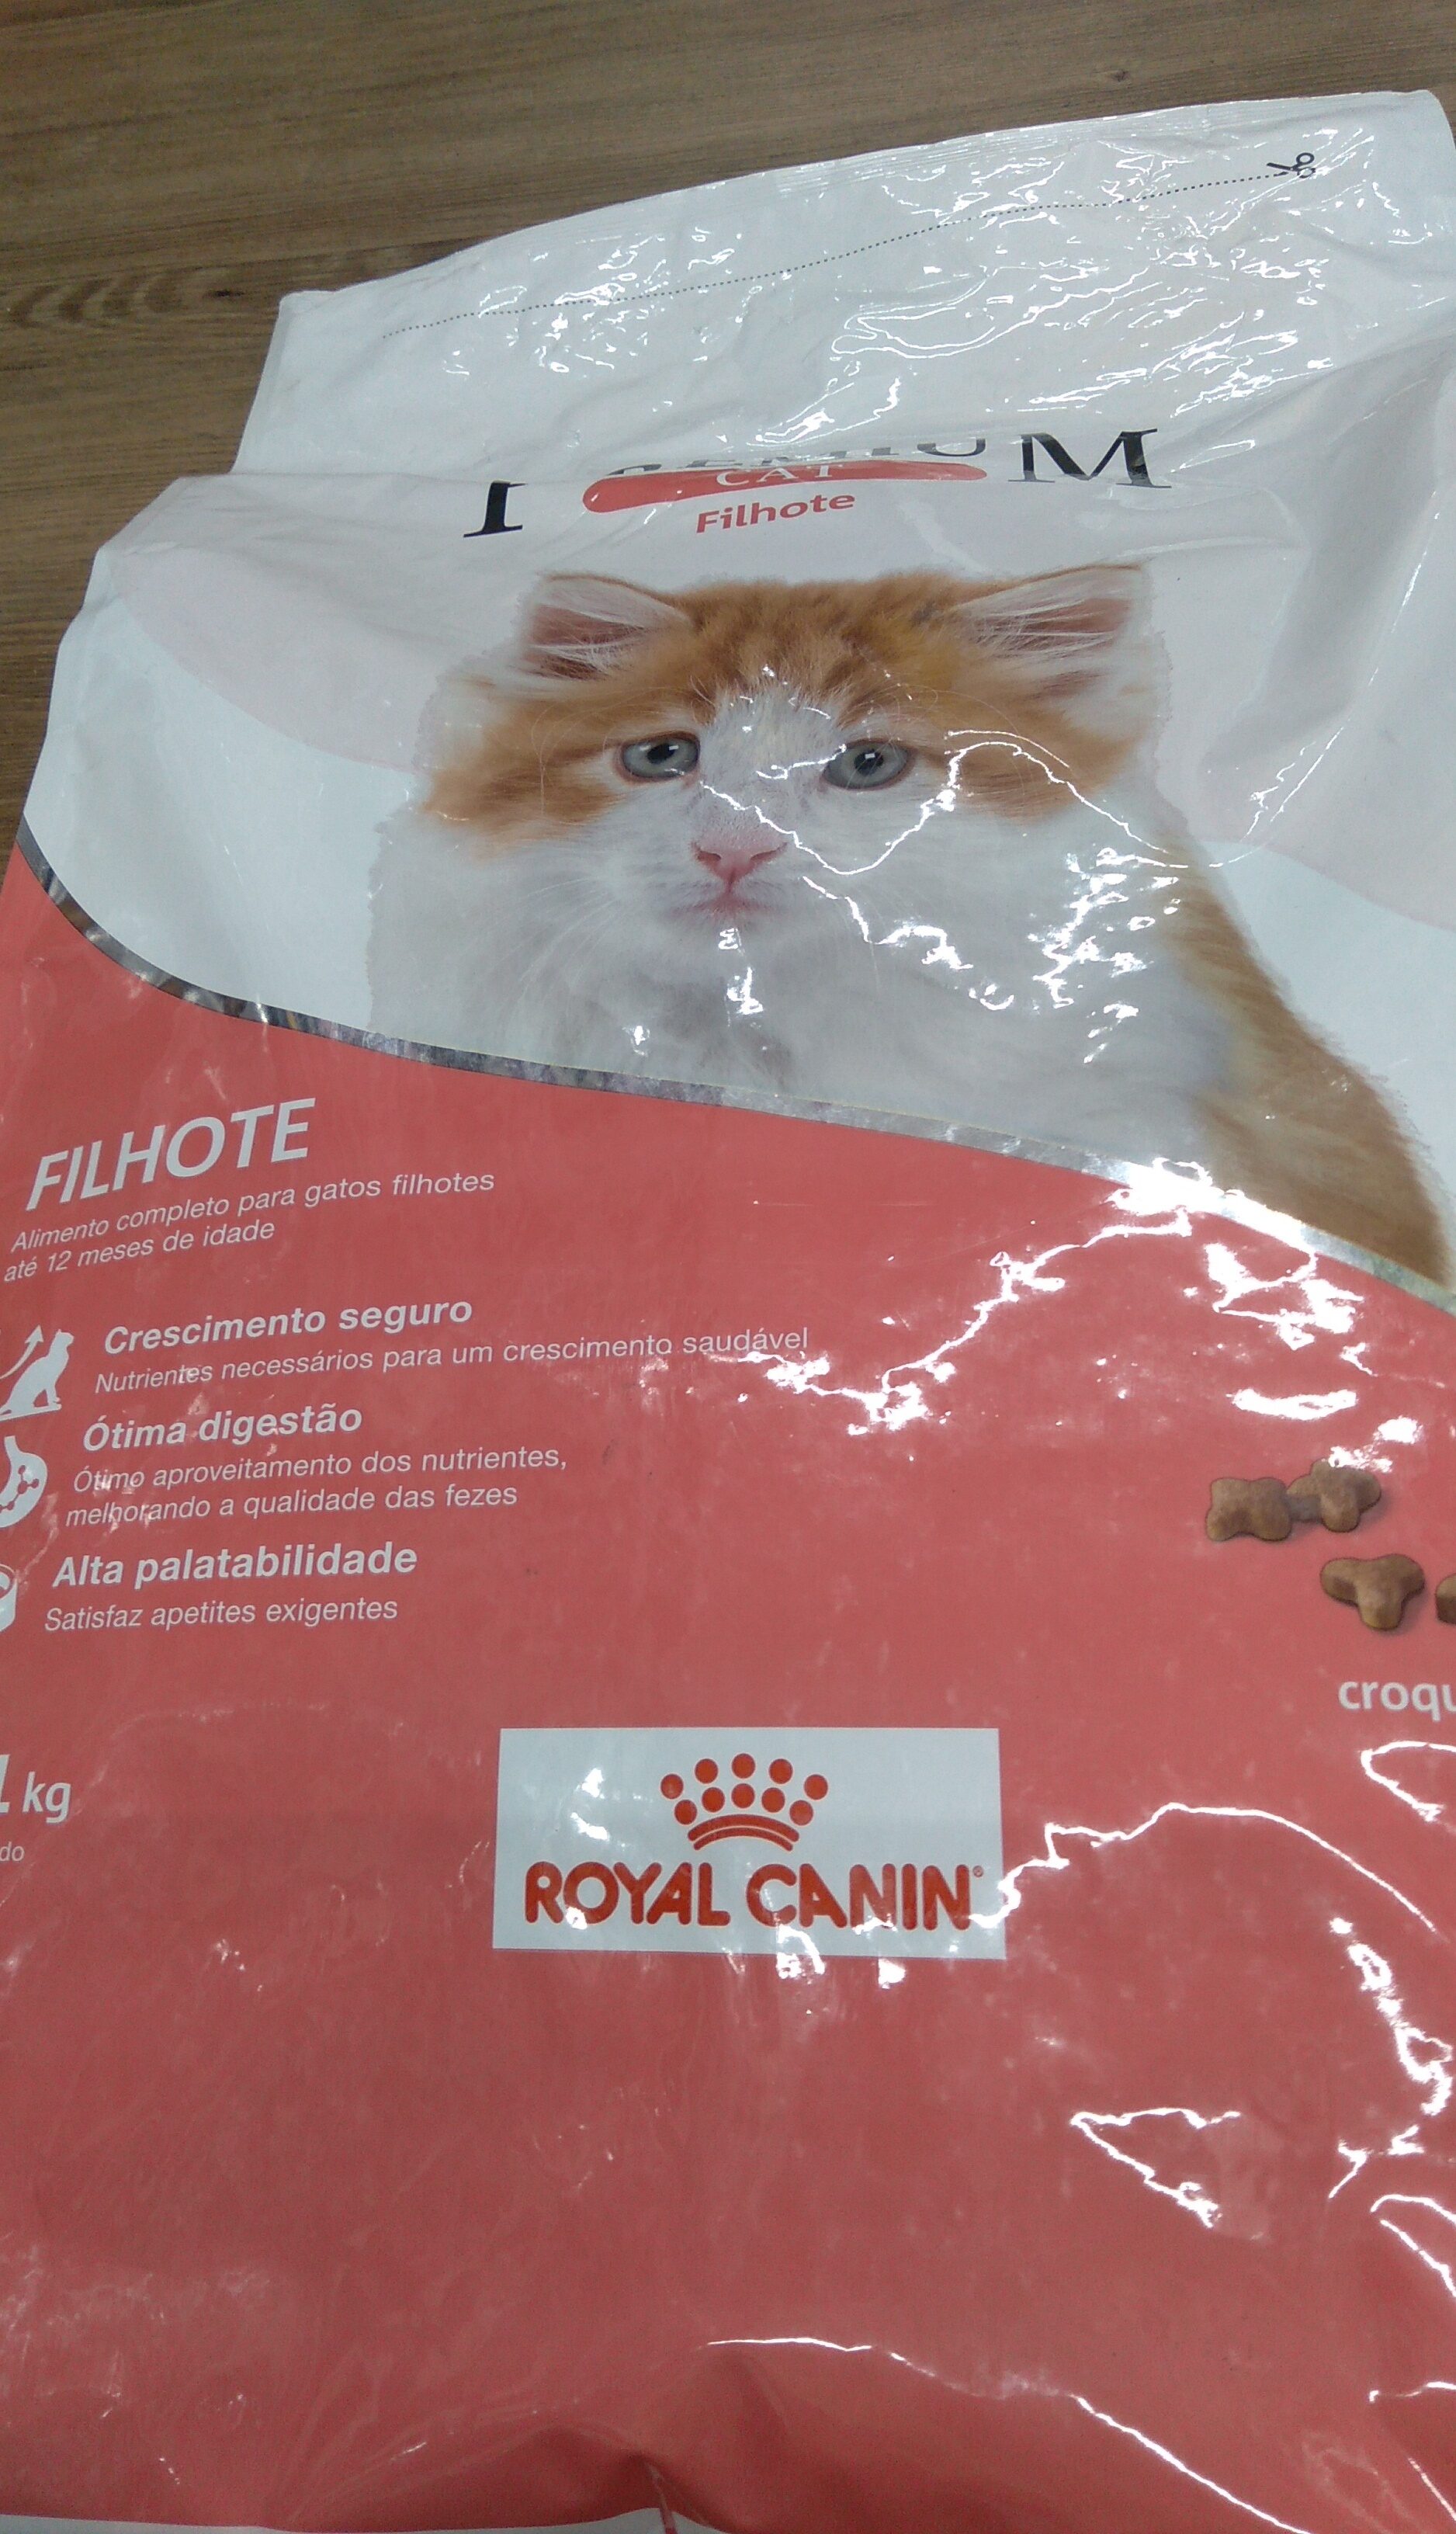 Royal canin gatos filhotes 10kg - Product - pt